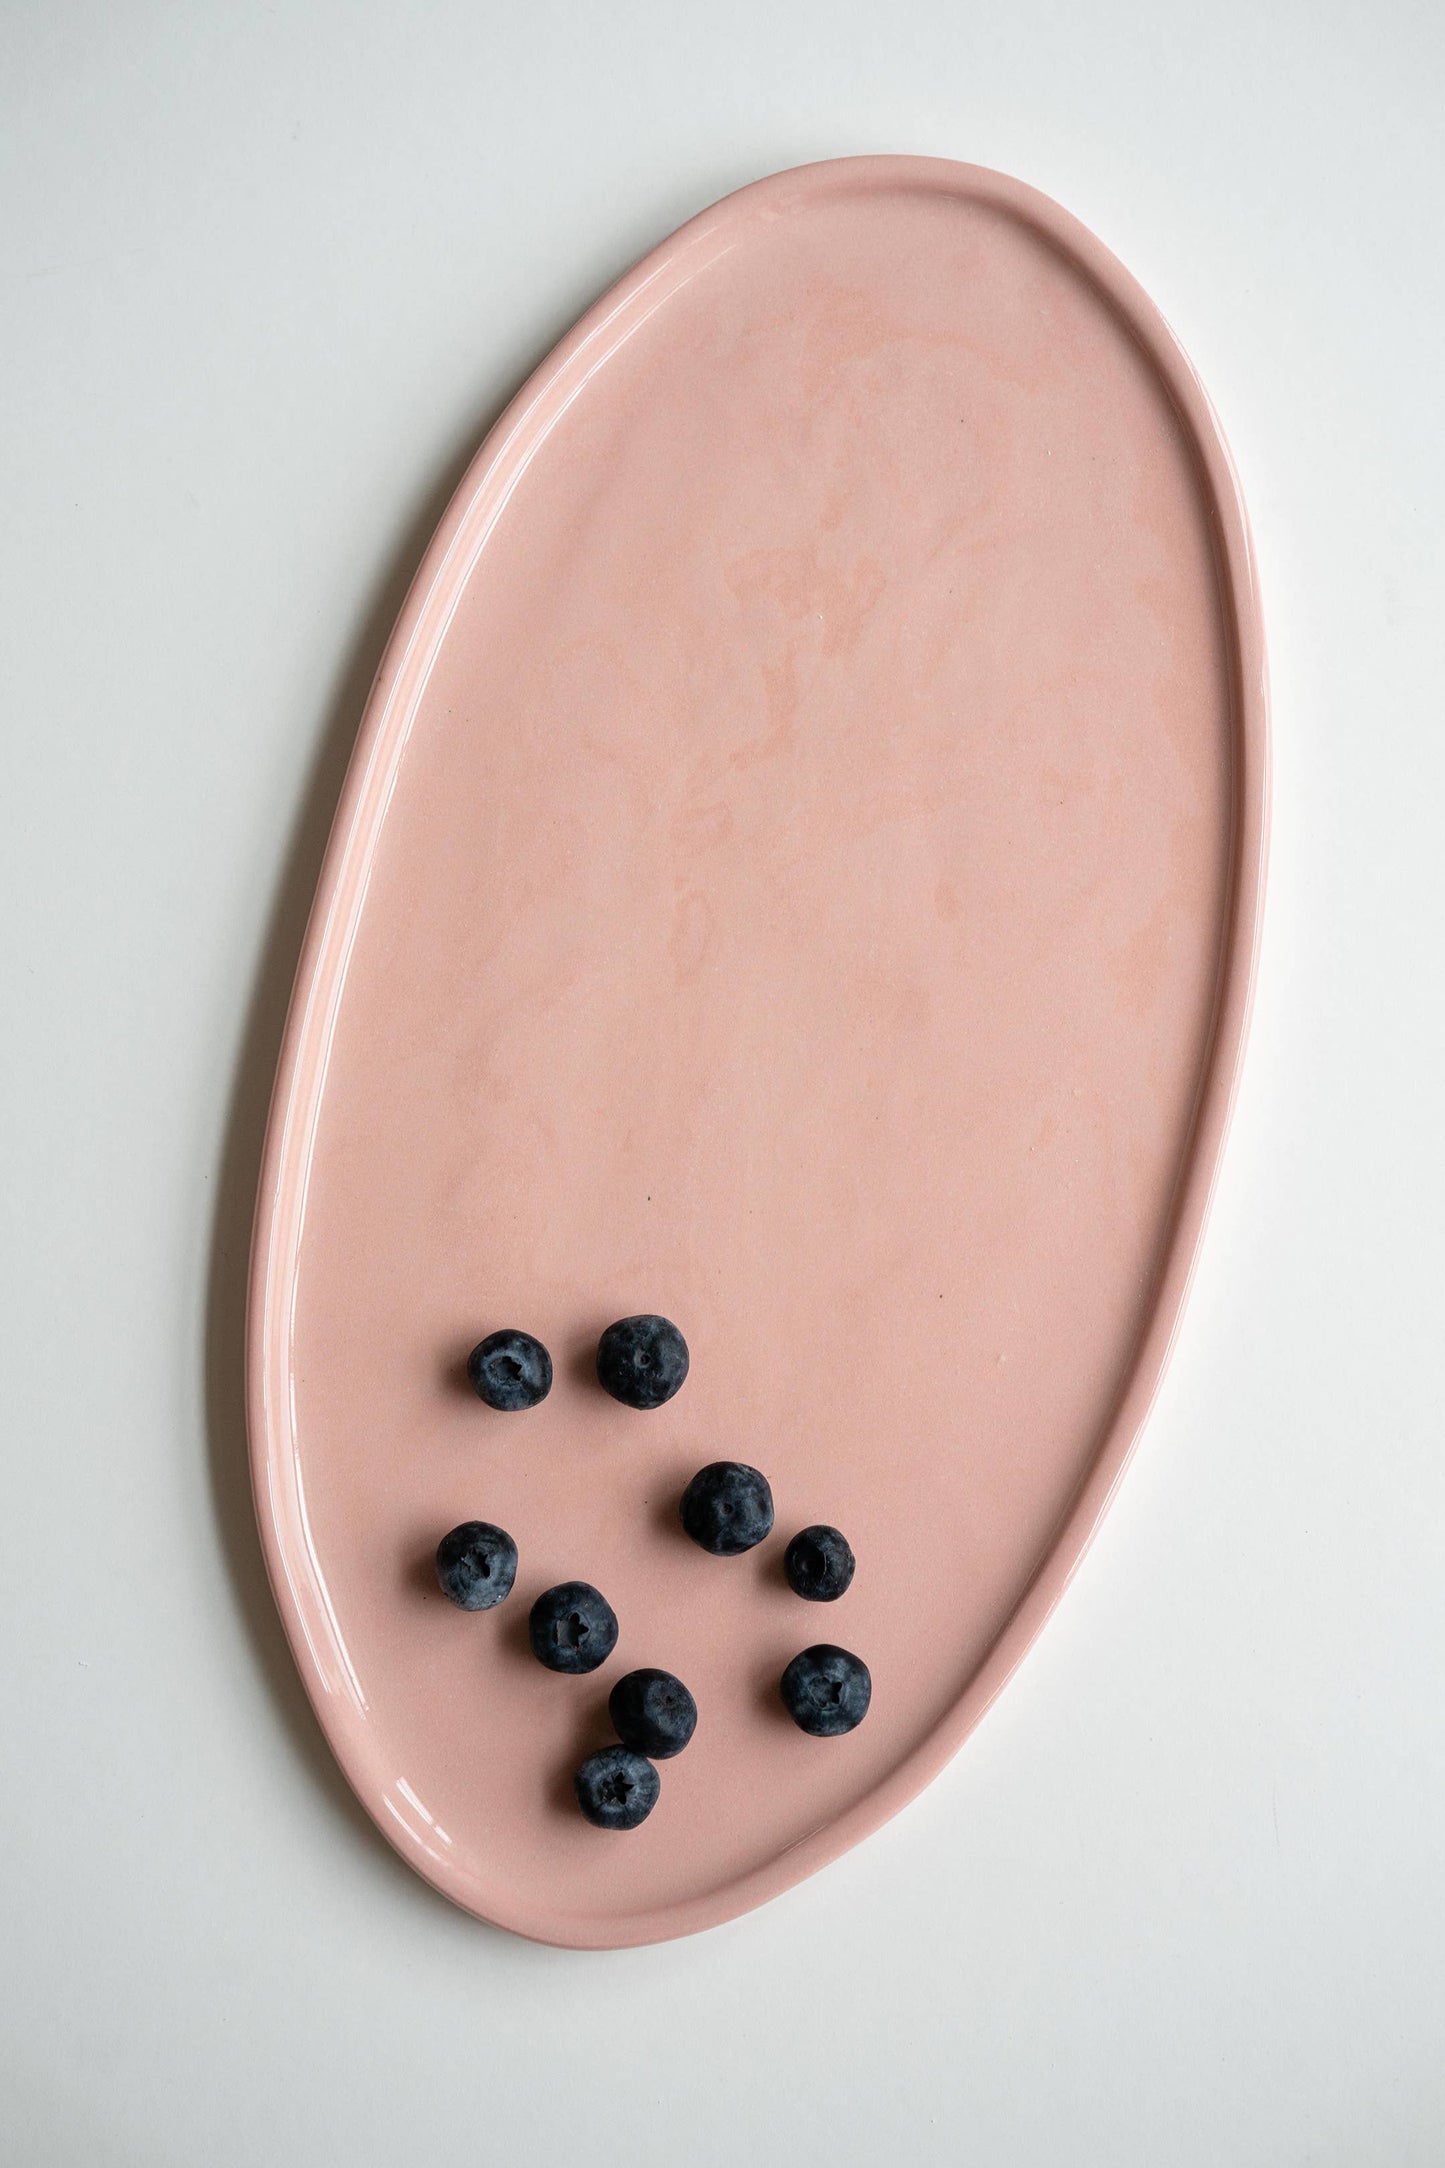 Ethical Trade Co Home Large / Powder Pink / Plain Handmade Ukrainian Porcelain Serving Platter